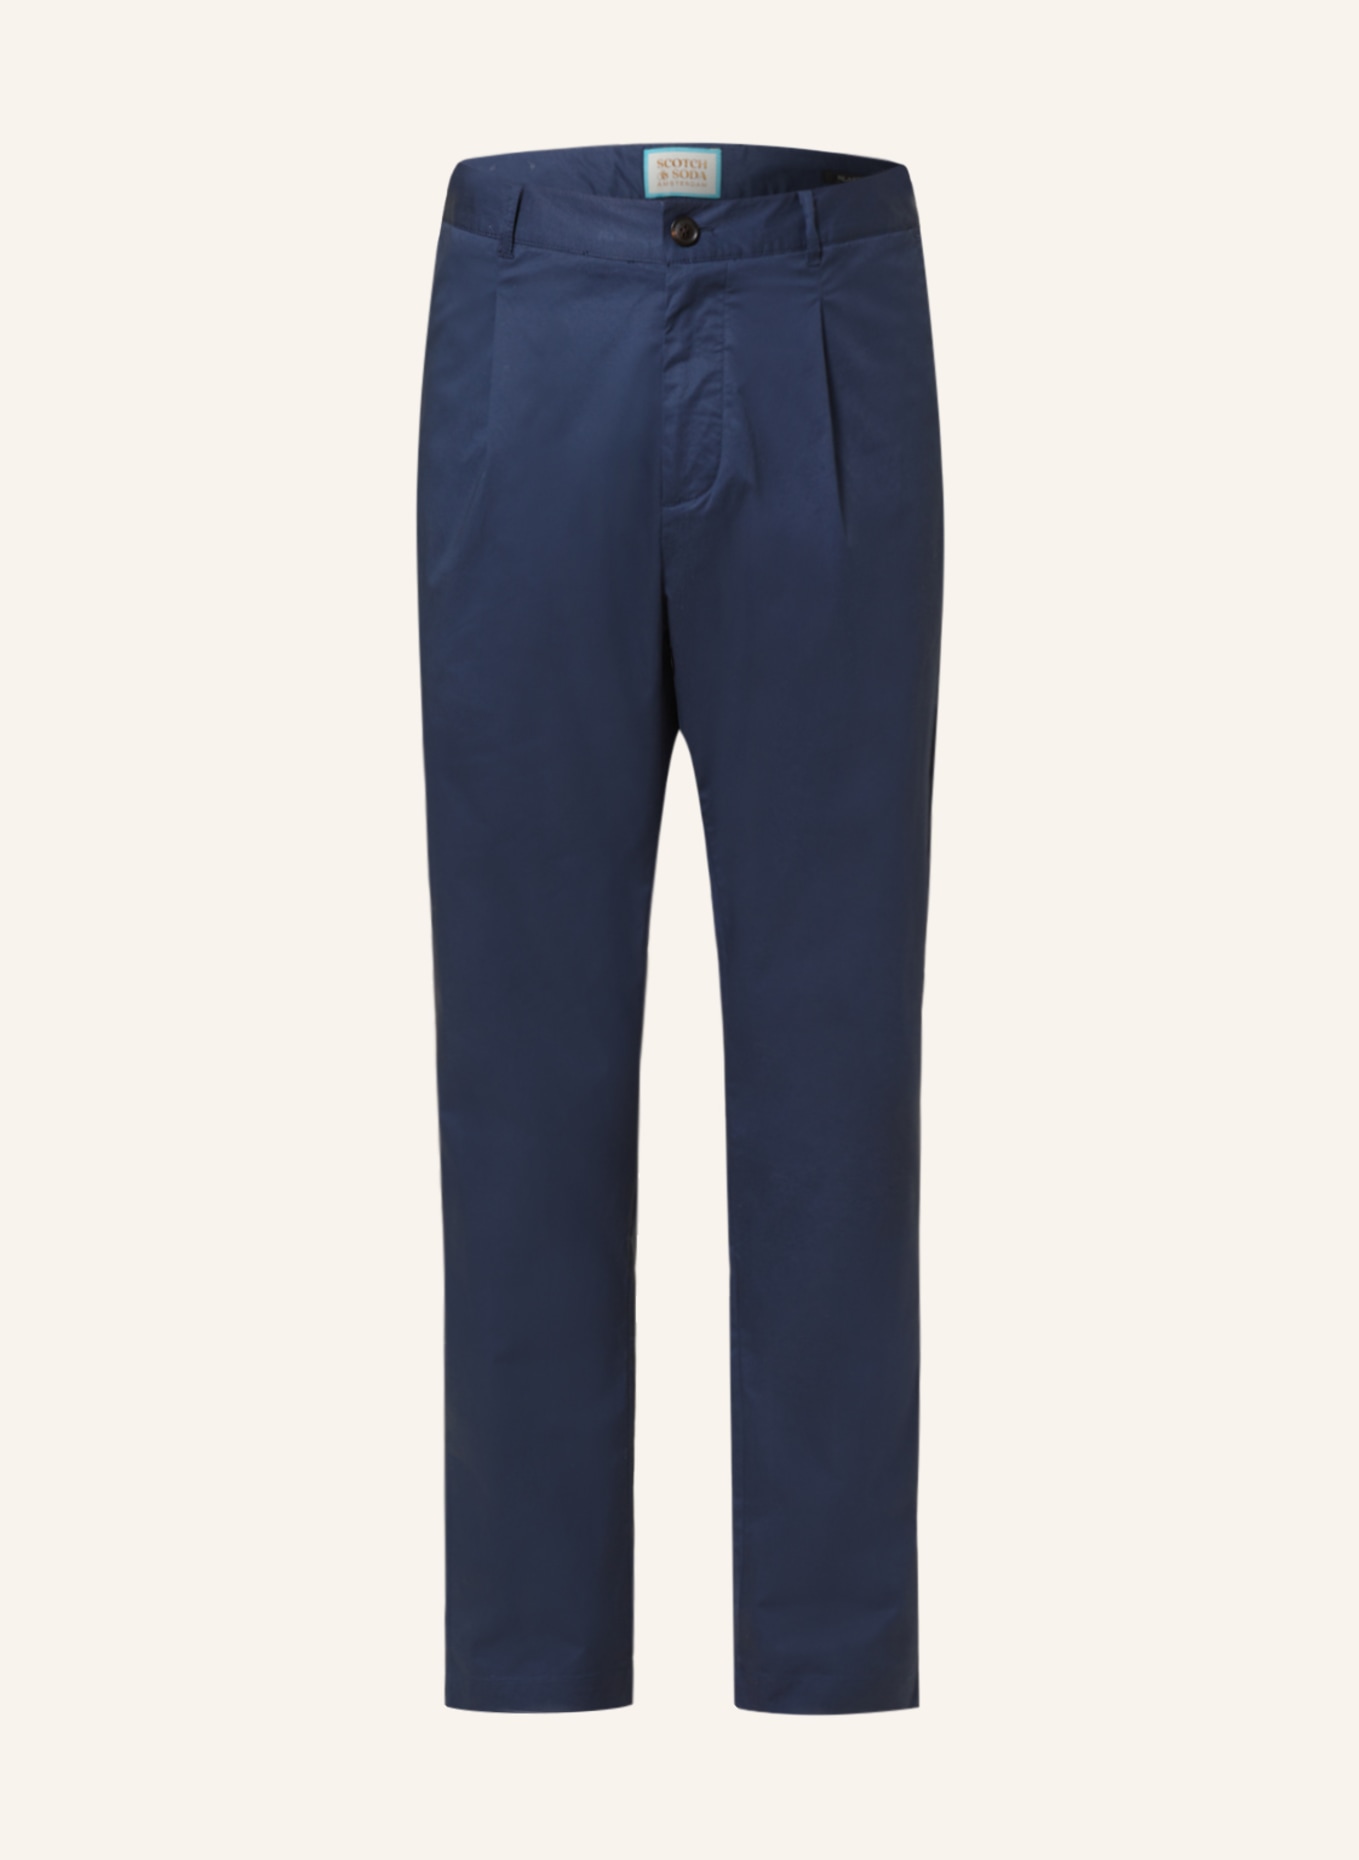 SCOTCH & SODA Suit trousers BLAKE regular slim fit, Color: 0562 steel (Image 1)